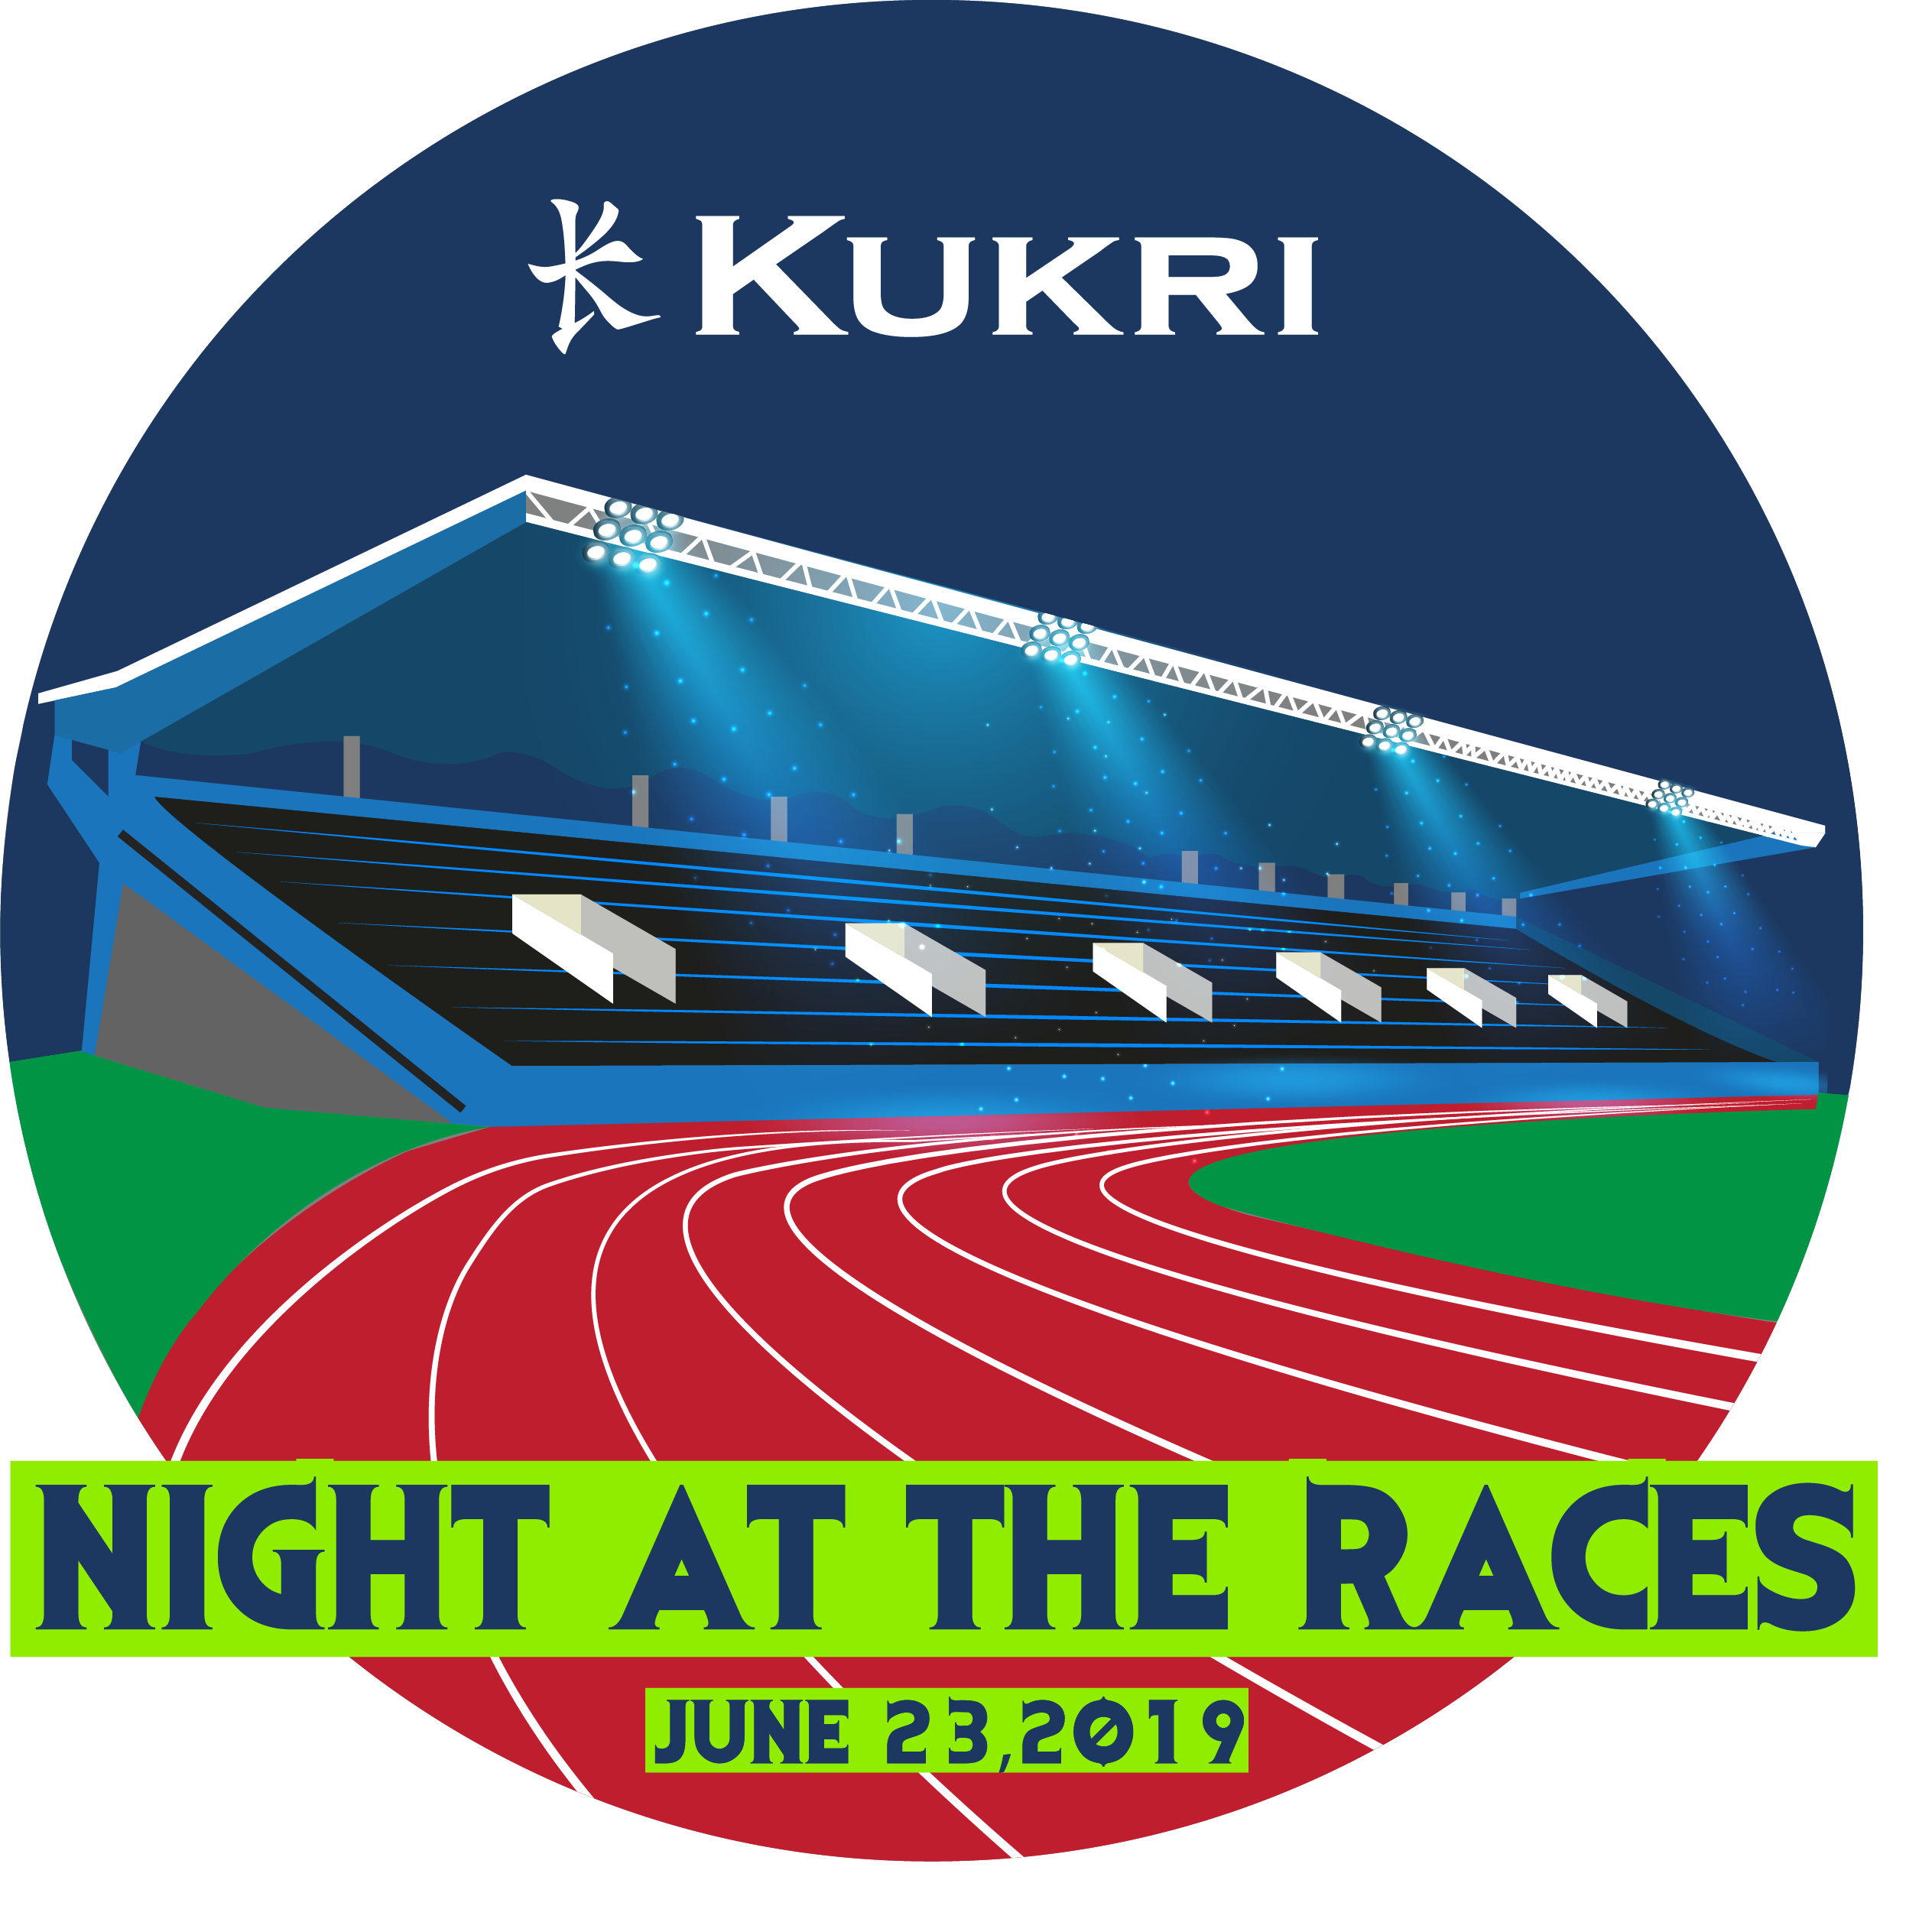 Kukri Night at the Races - Lookup